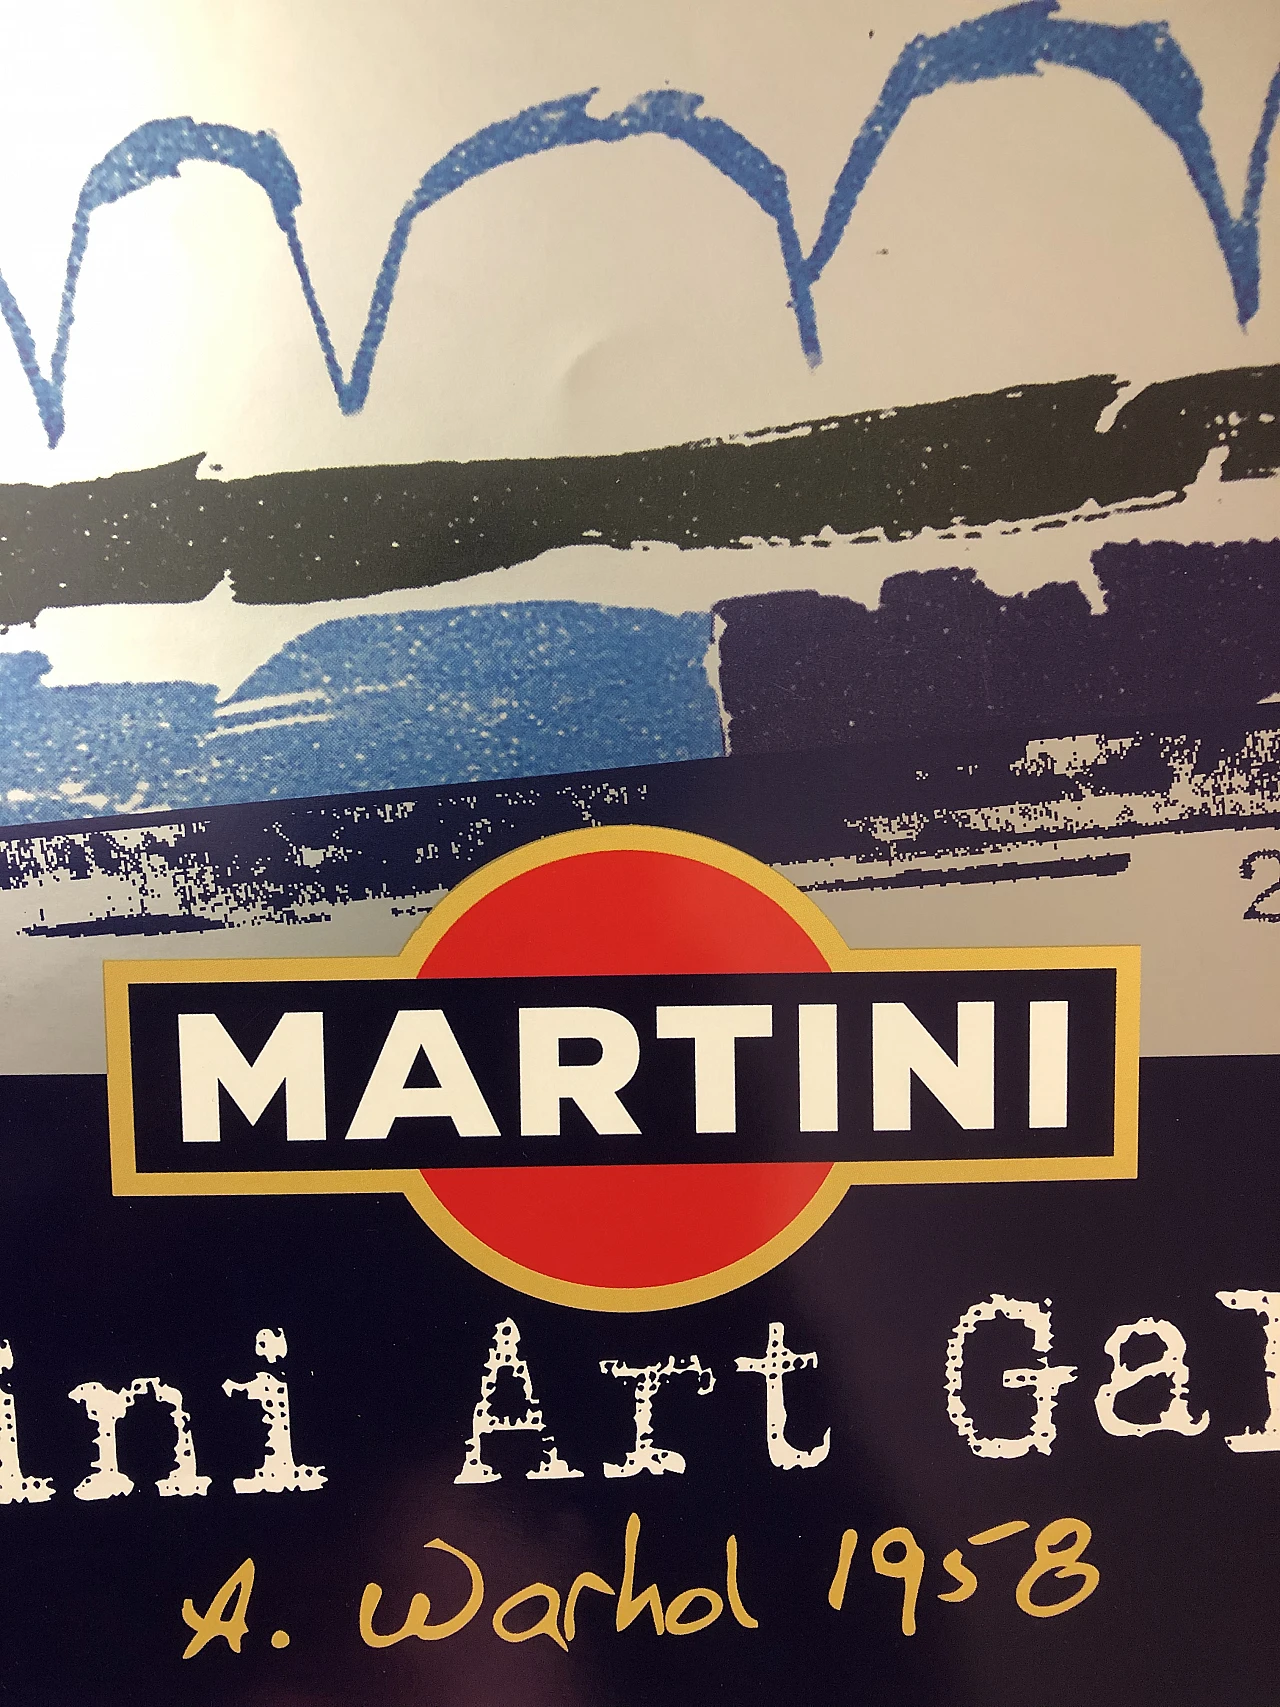 Da Andy Warhol, Martini Art Gallery, litografia, 2001 8